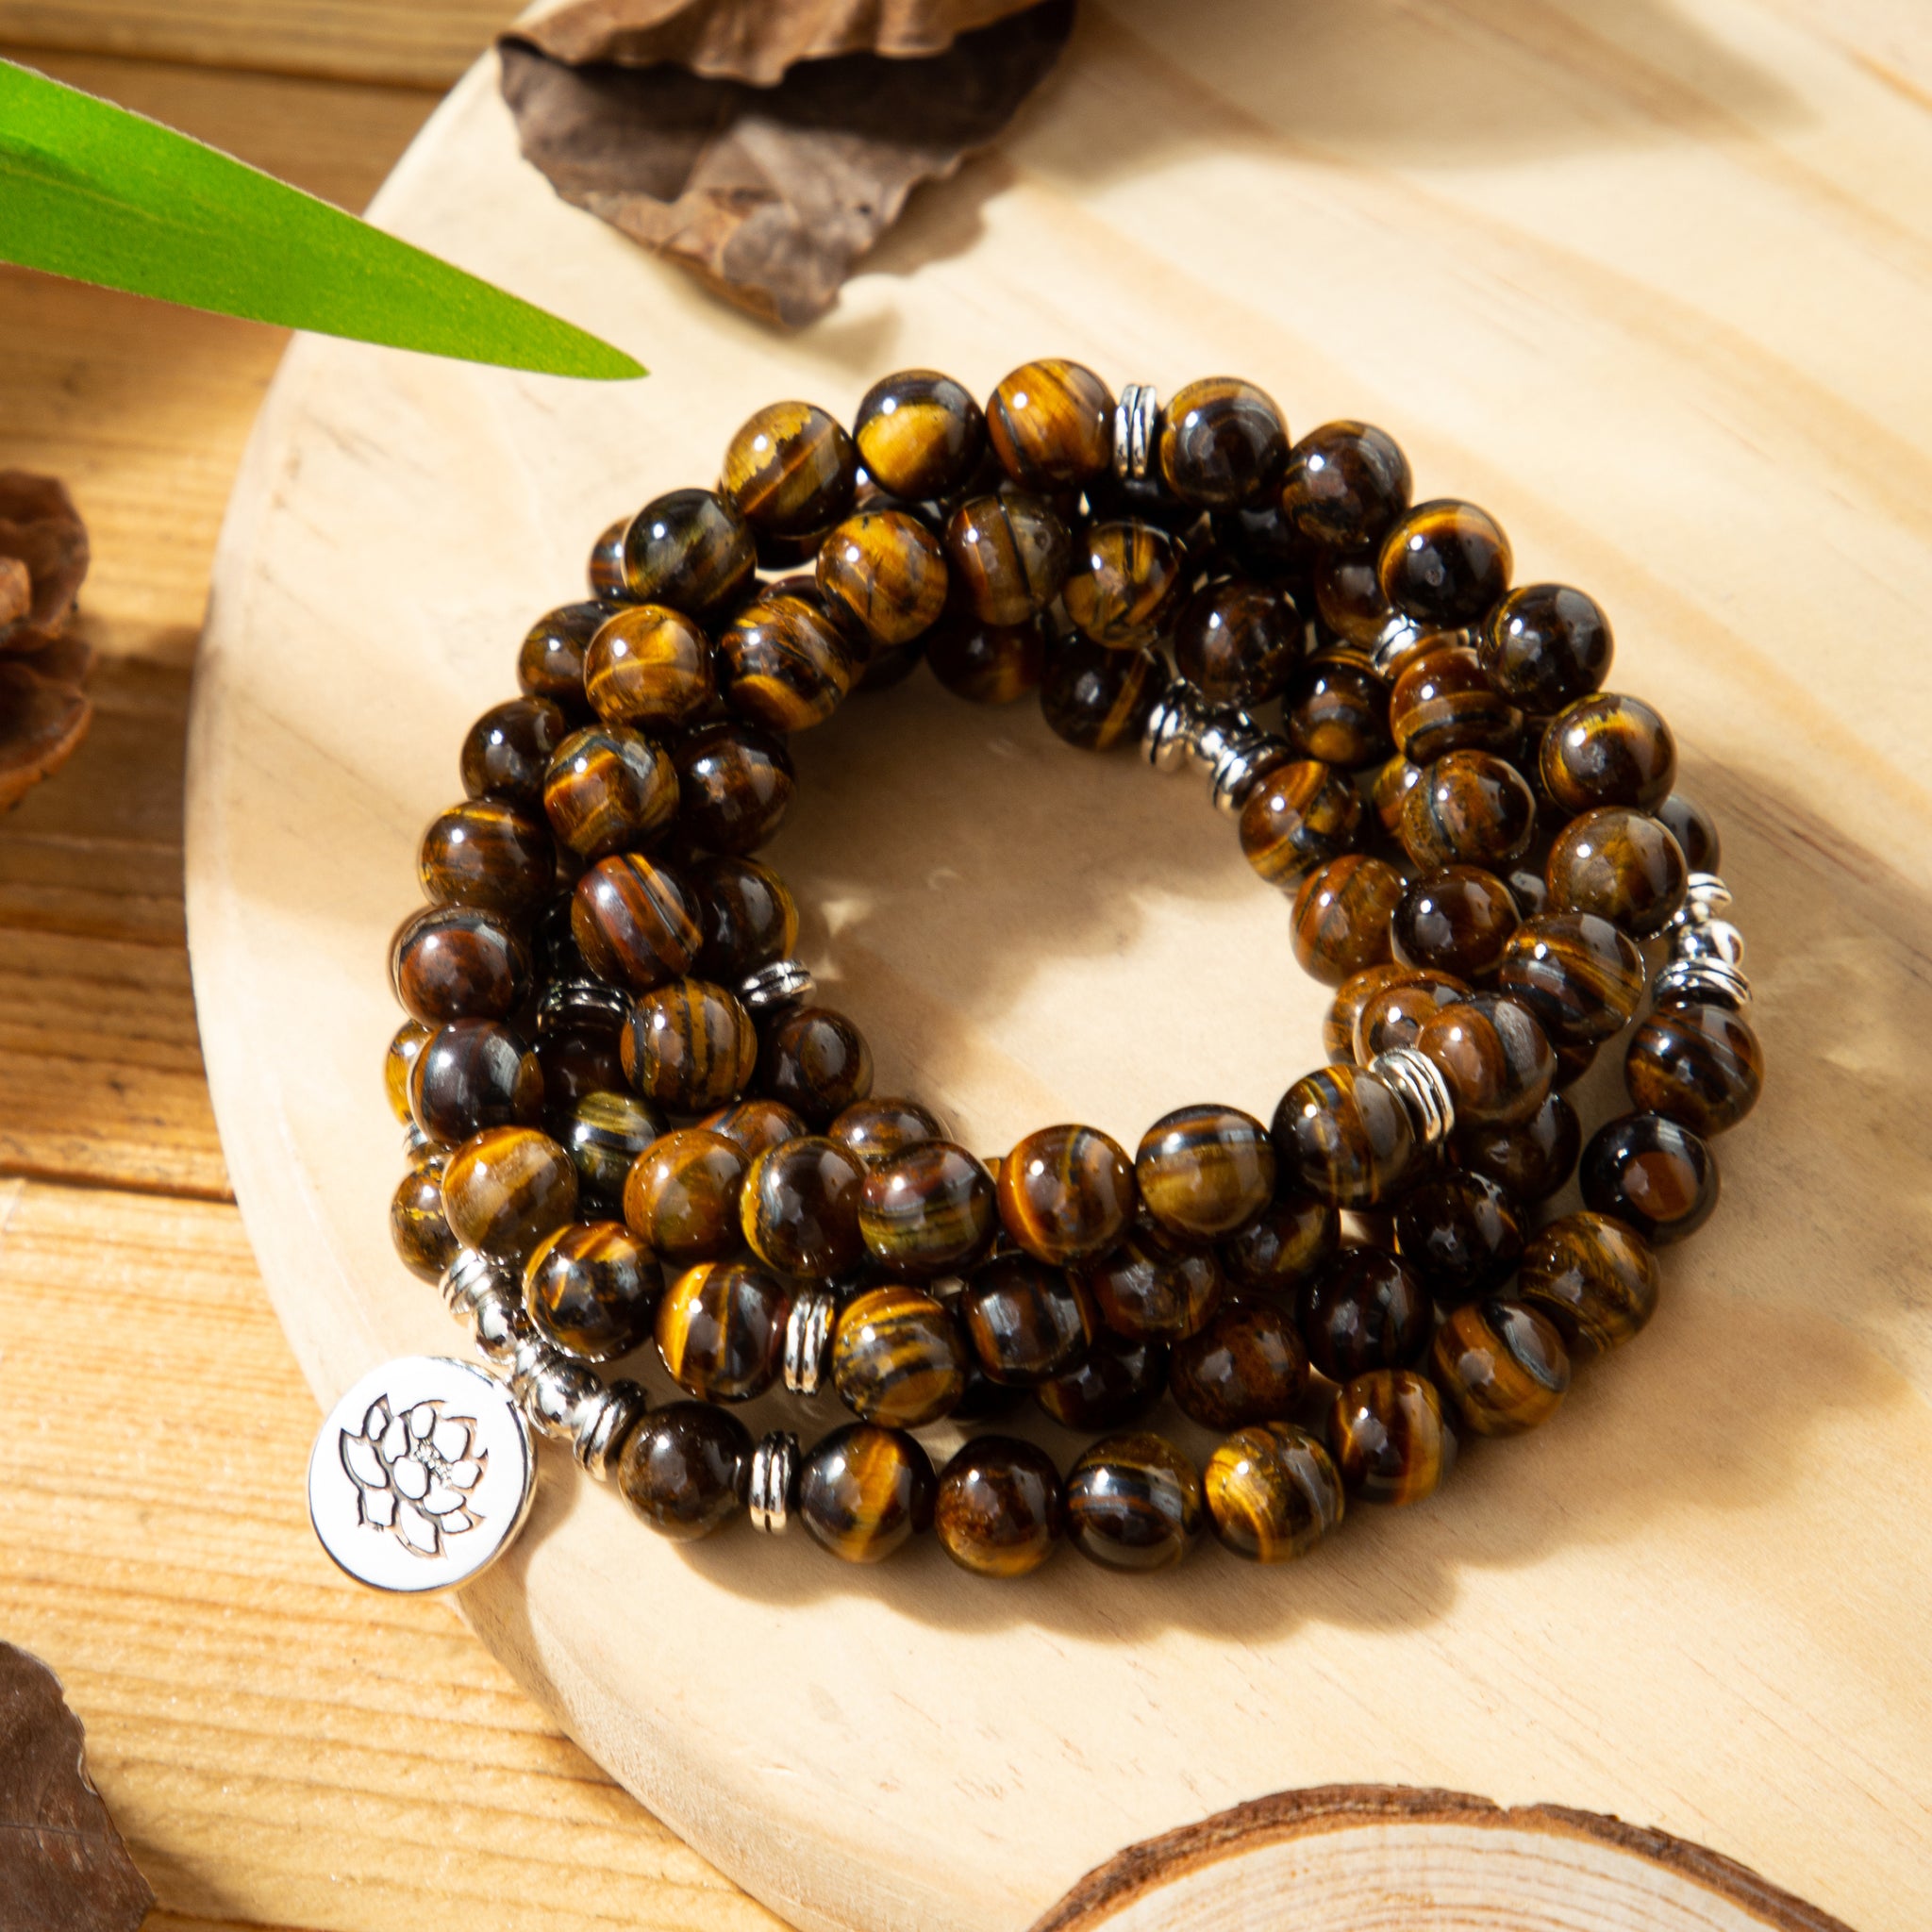 Tigers Eye 108 Mala Beads Stone Healing Inspirational Balancing Calm Bracelet